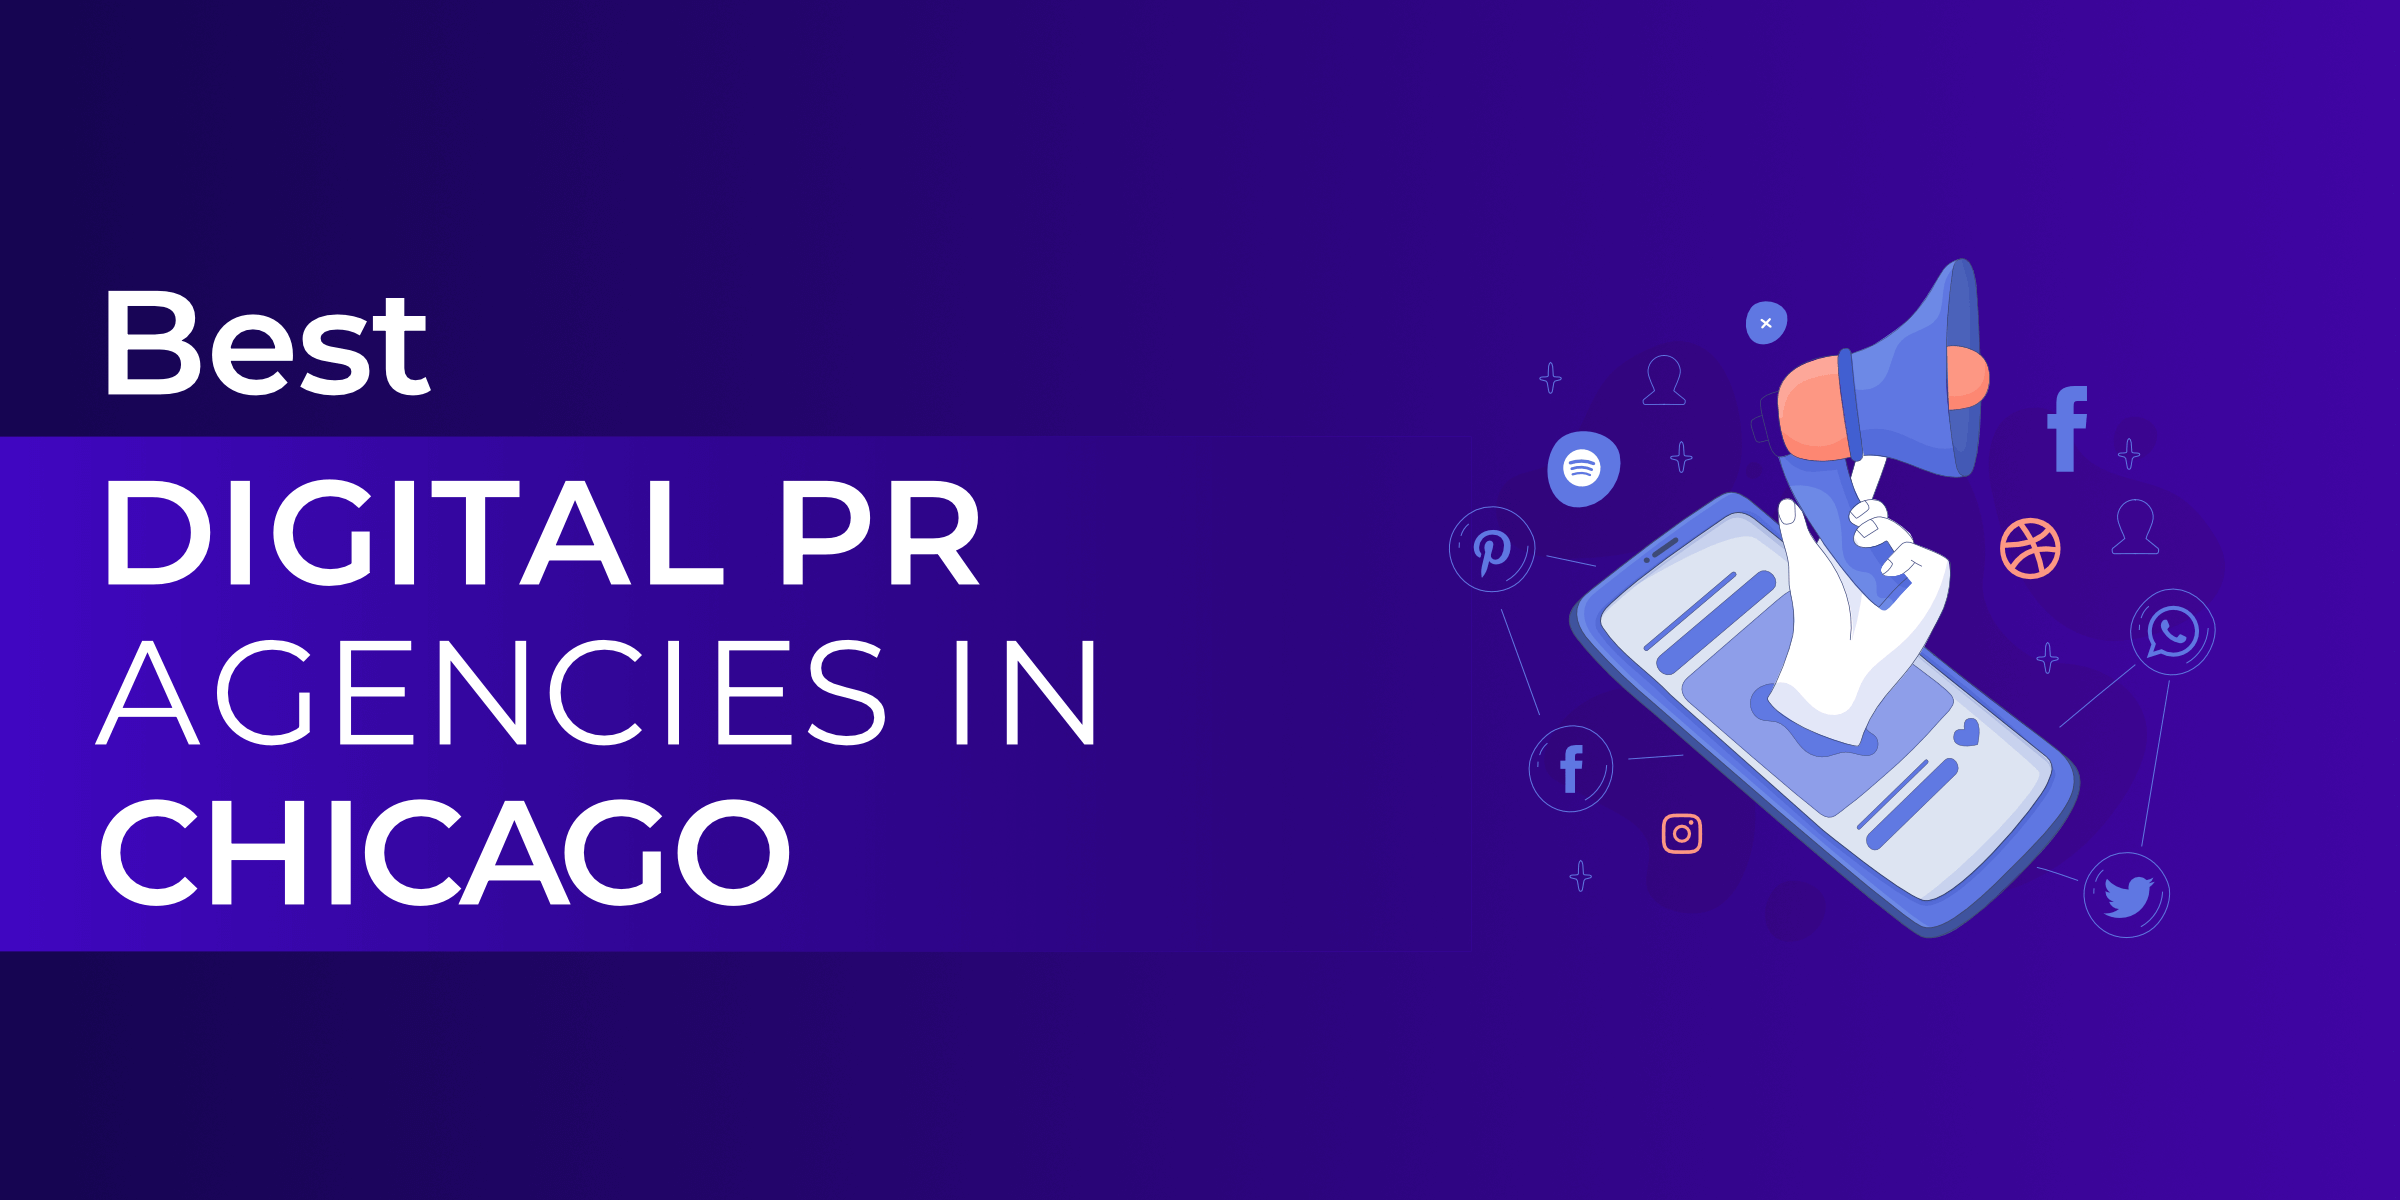 Best Digital PR Agencies in Chicago